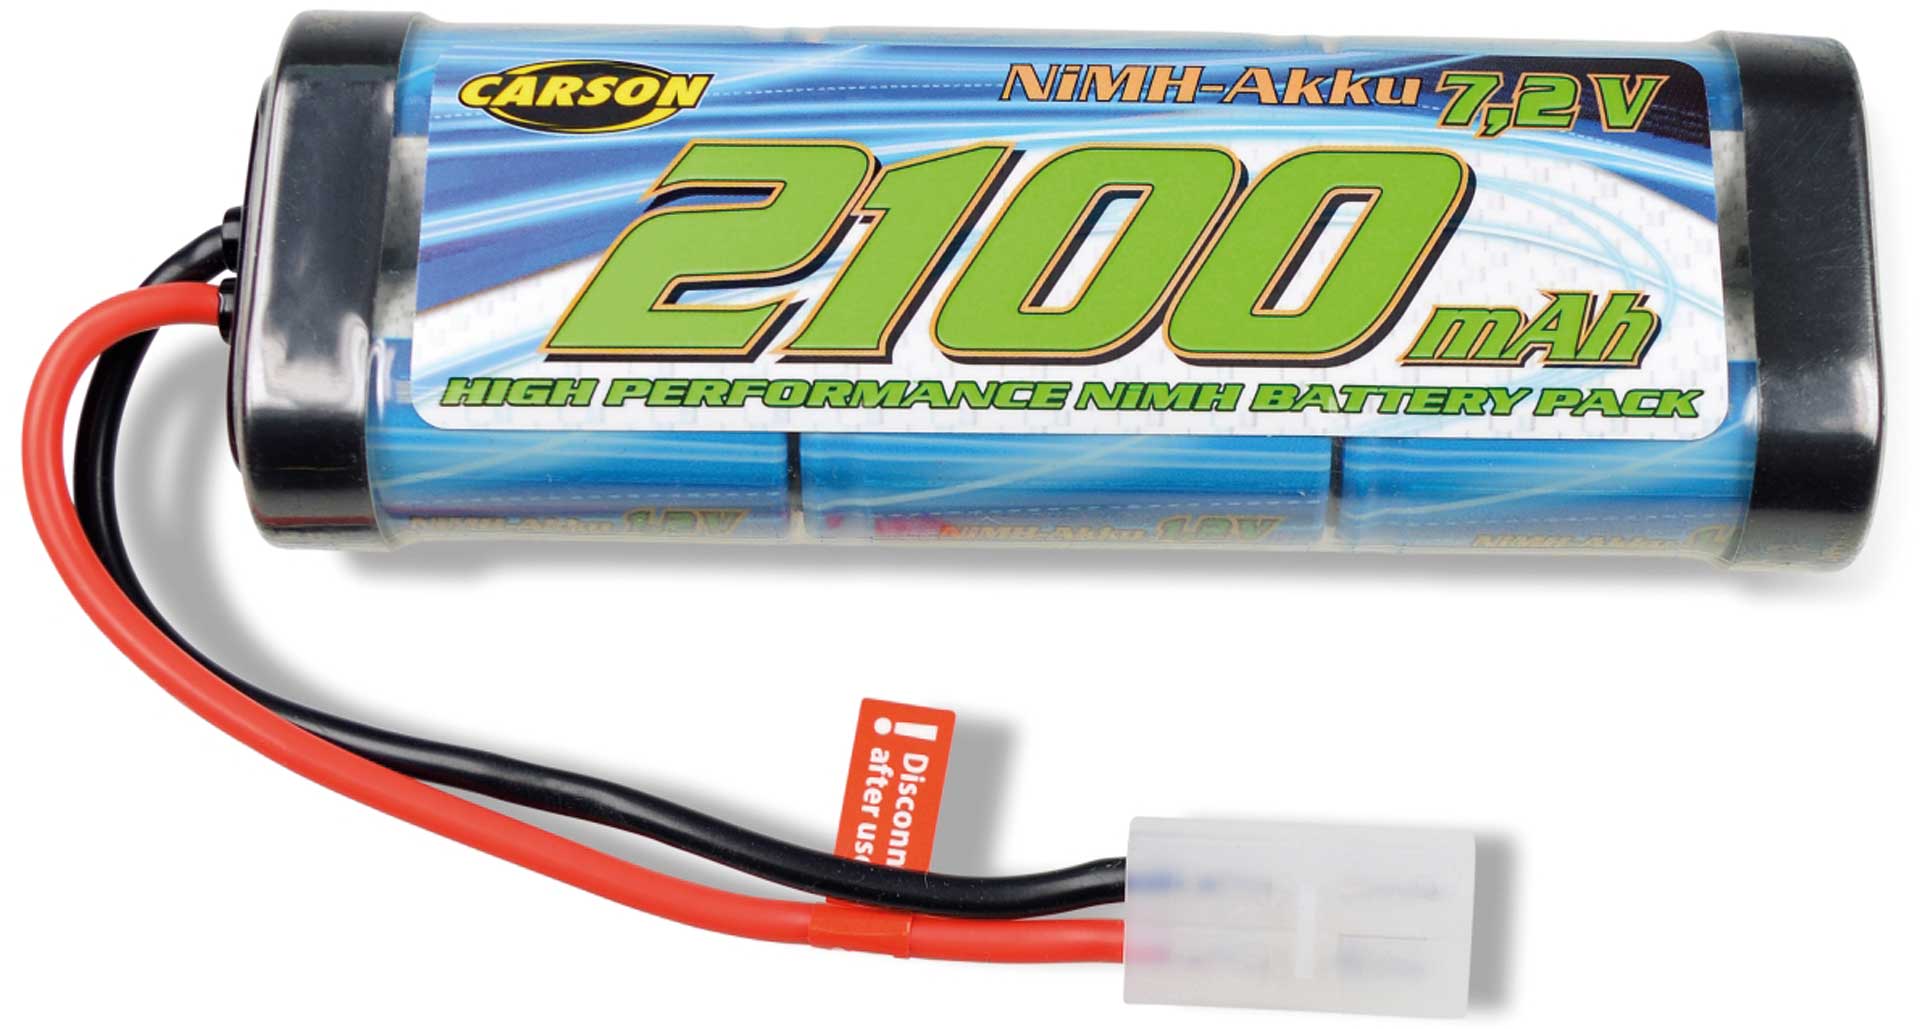 CARSON 7.2V/2100mAh NiMH Race battery TAM